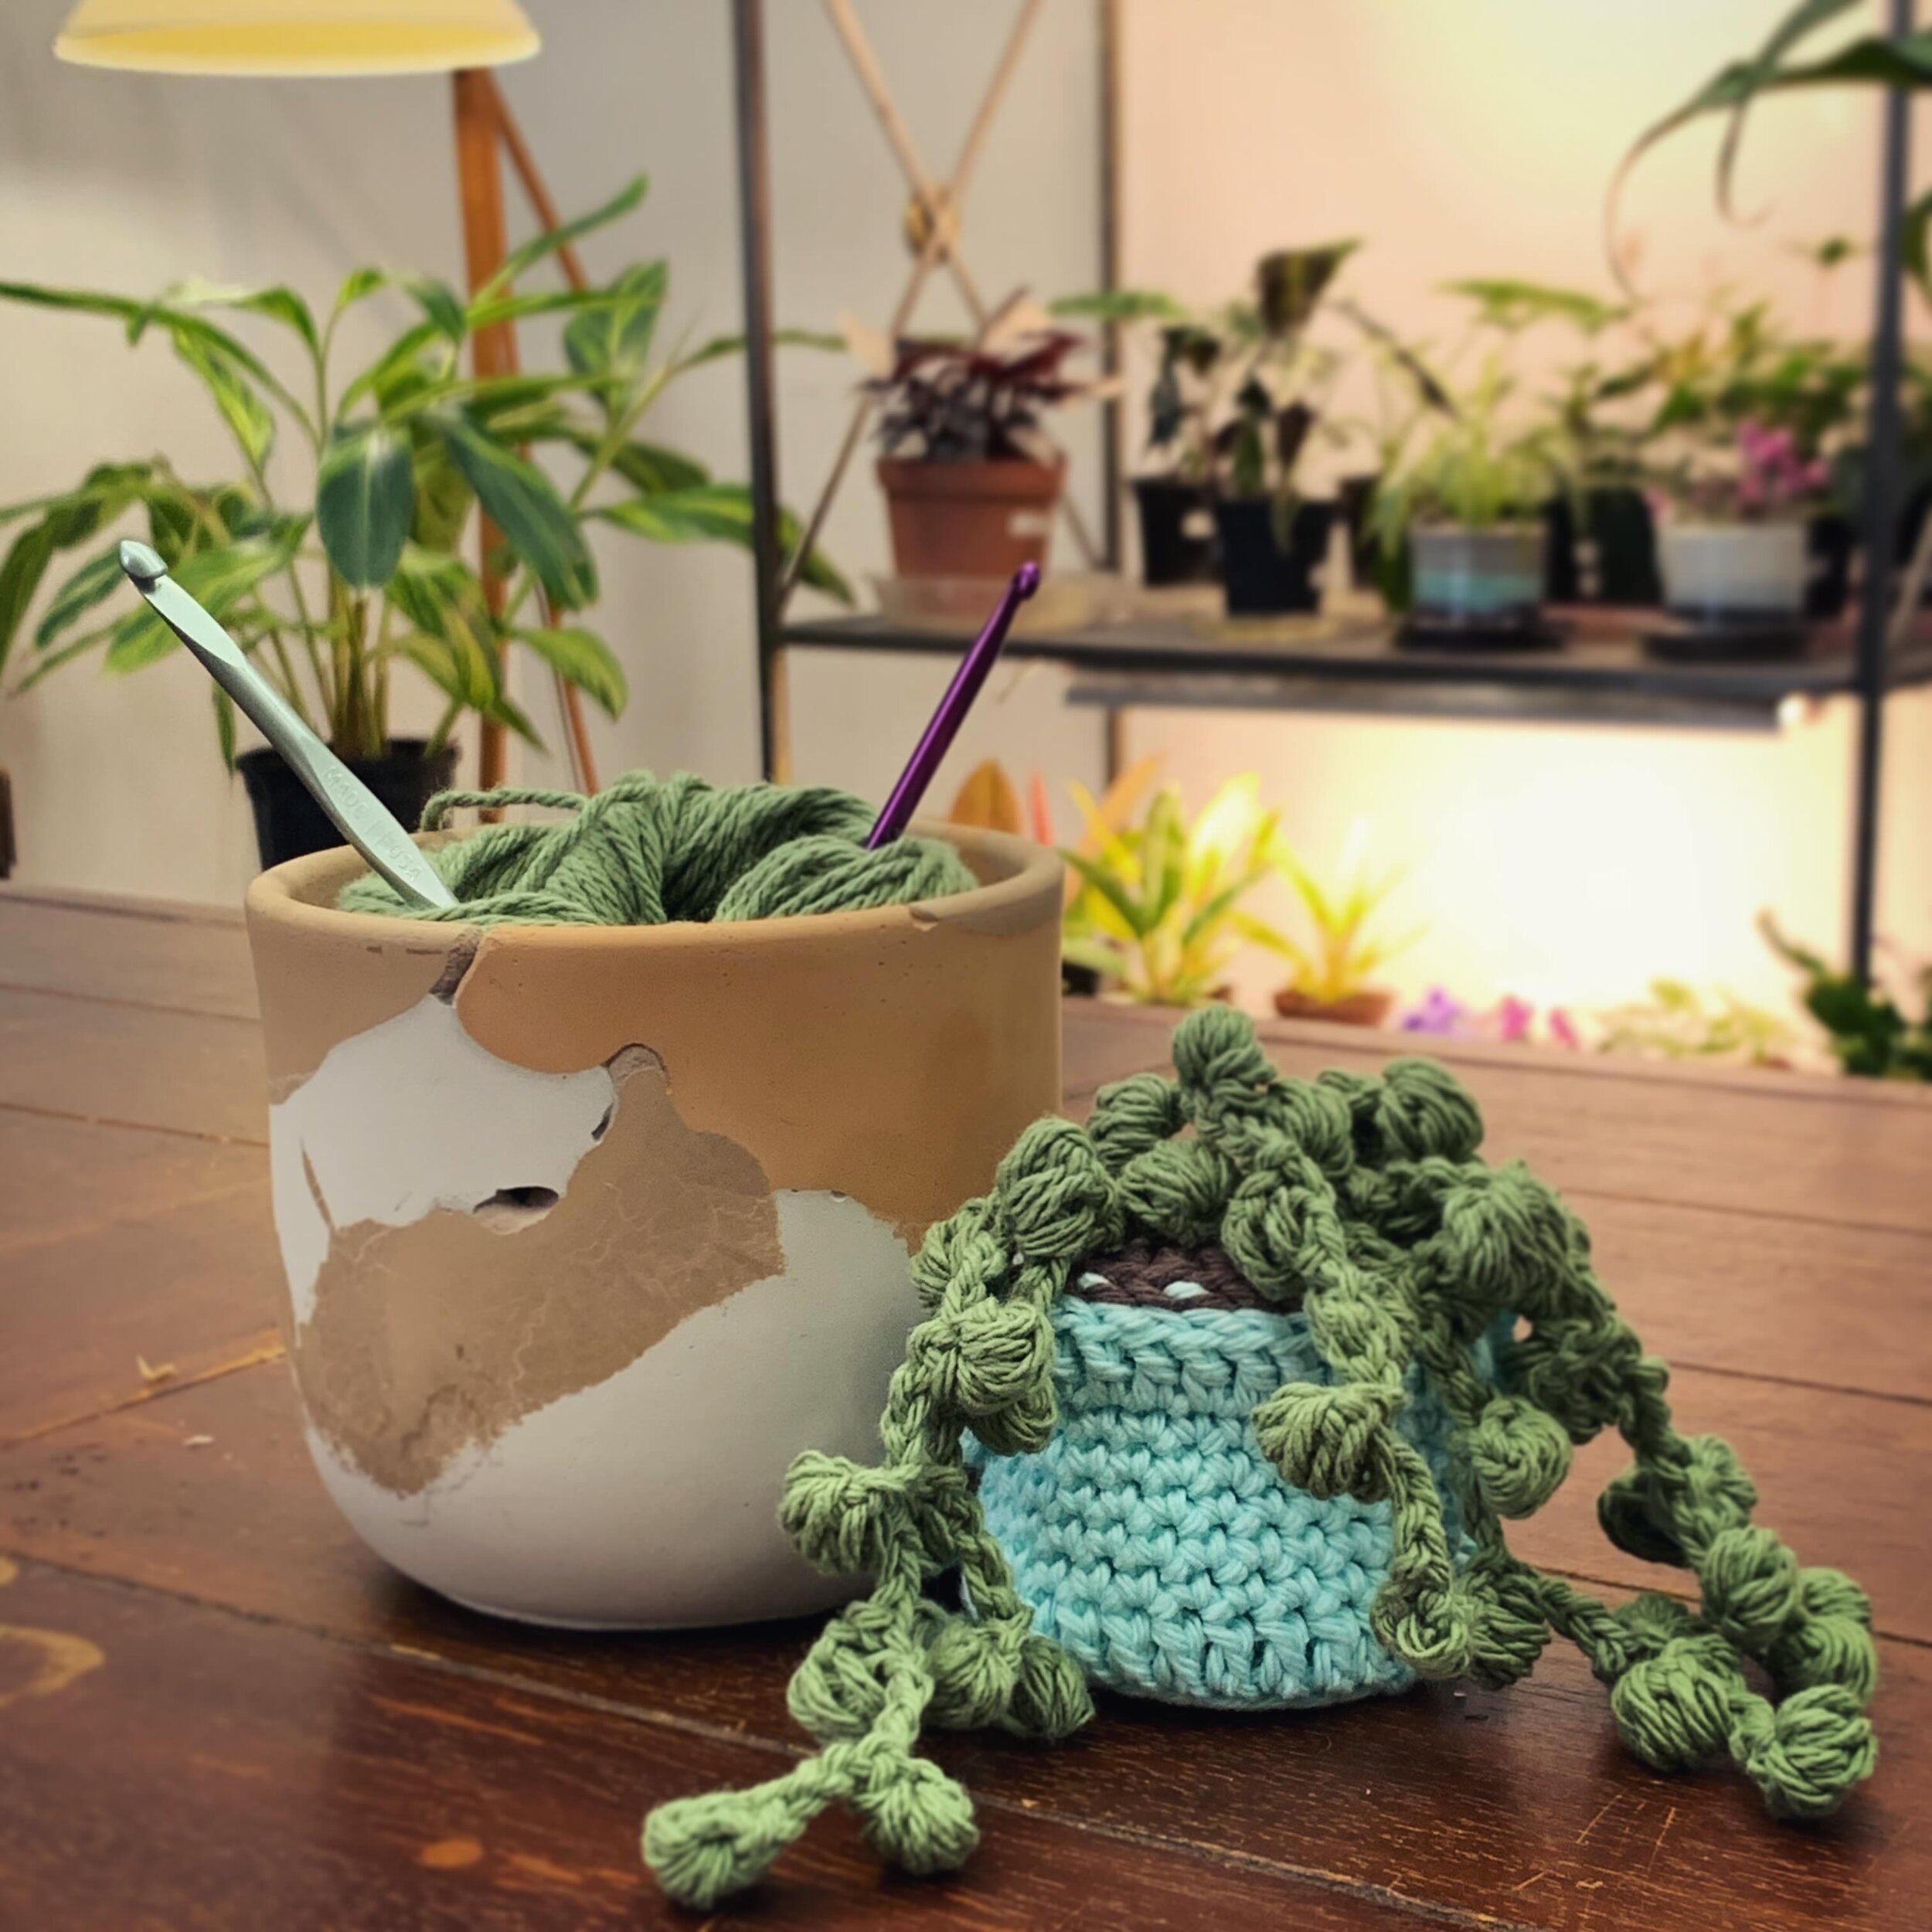 🧶 🪡 Crocheting up more String of Pearls 🌱 

#smallbusiness #shoplocal #queerowned #lgbtq #houseplants #greenvibes #prana #newton #boston #handmade